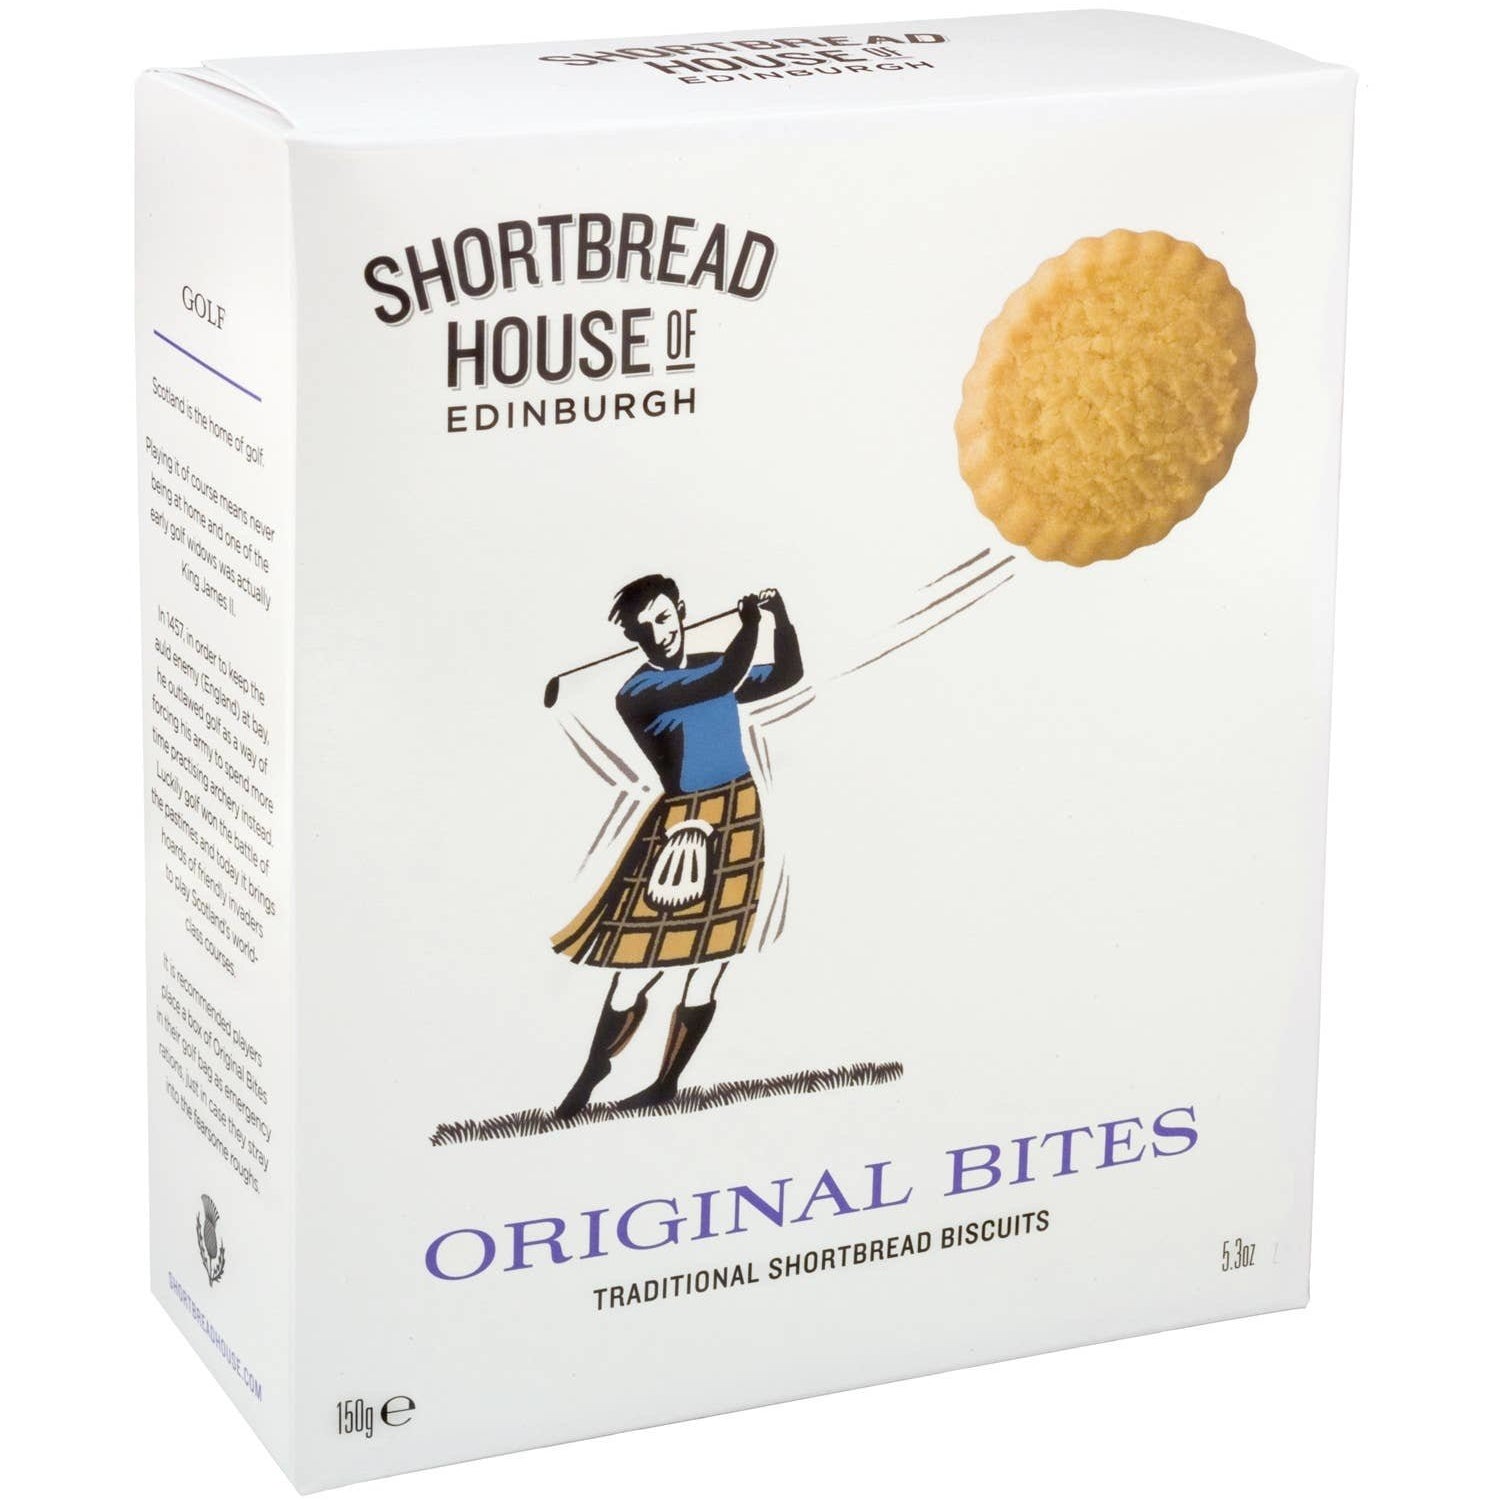 Picture of box of Shortbread House of Edinburgh All Butter Original Bites